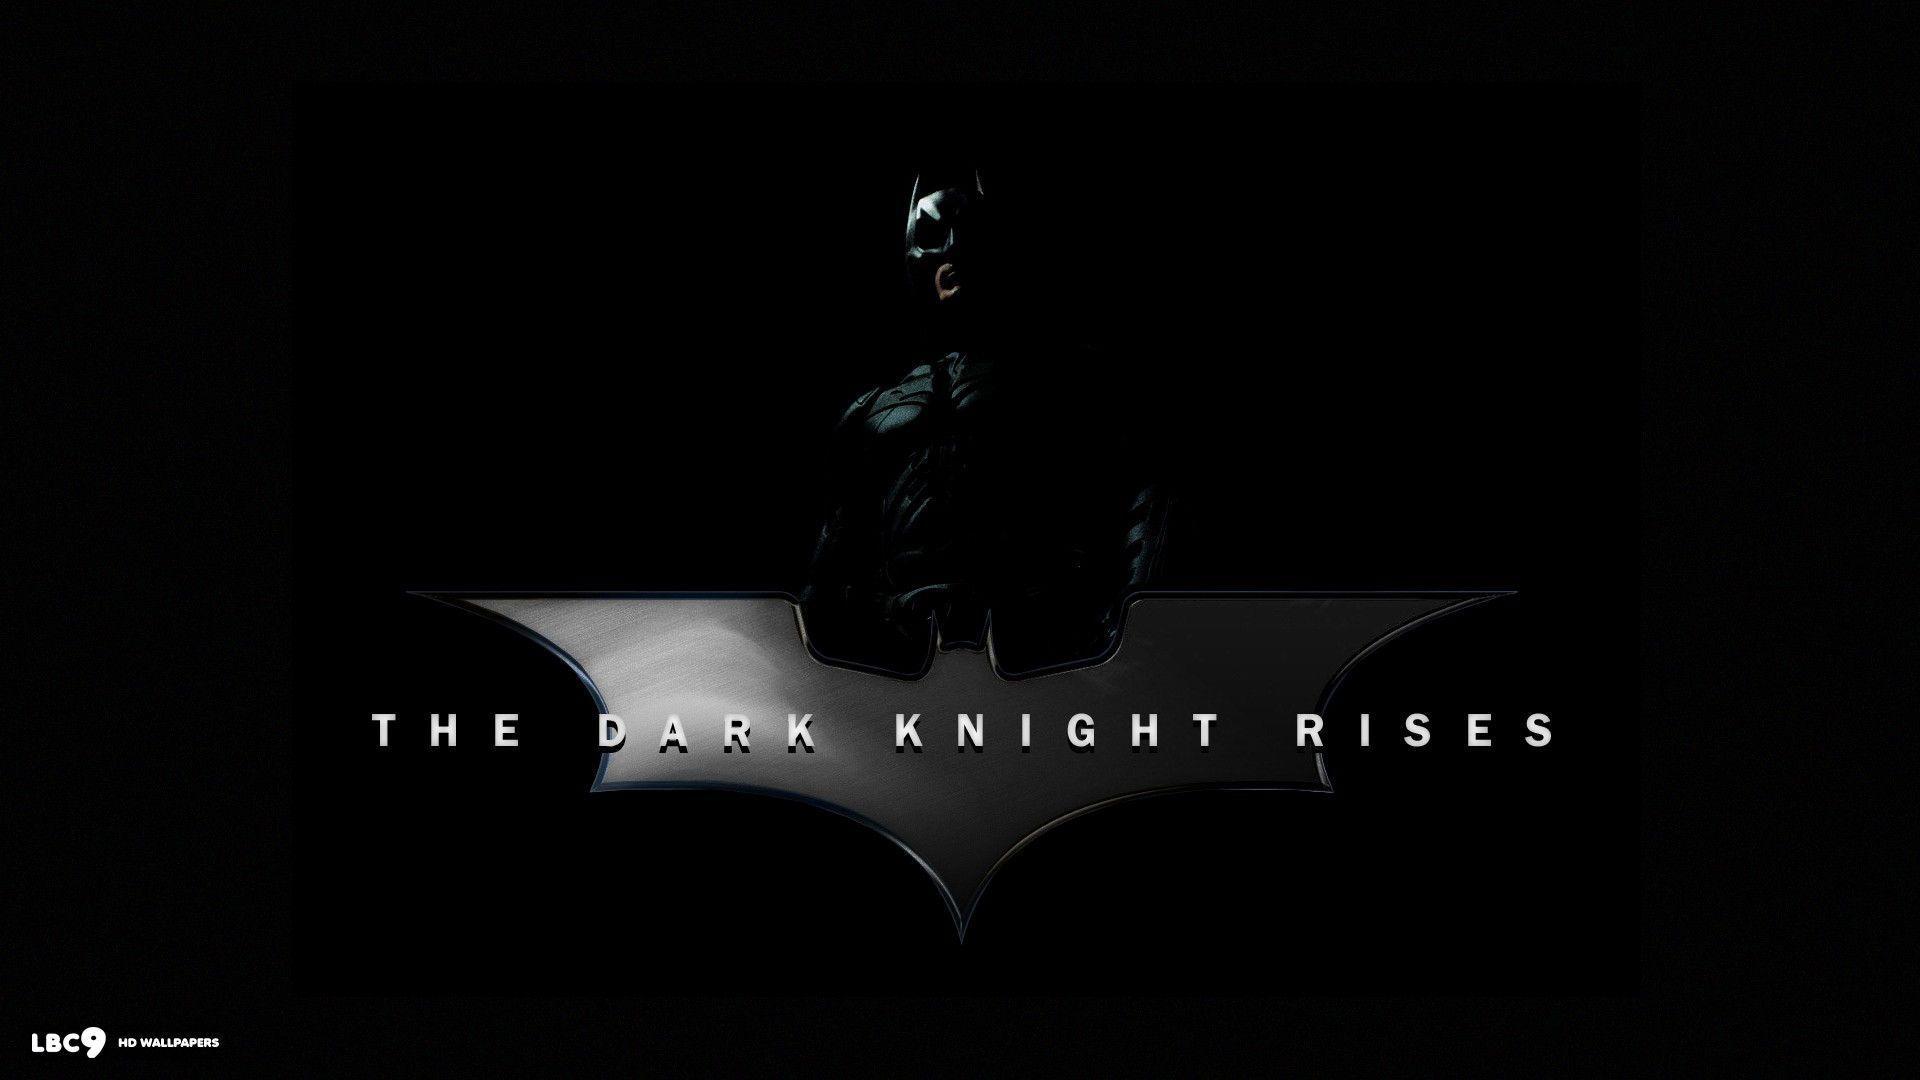 TDKR Logo - The Dark Knight Rises Photo (24298122) - Fanpop